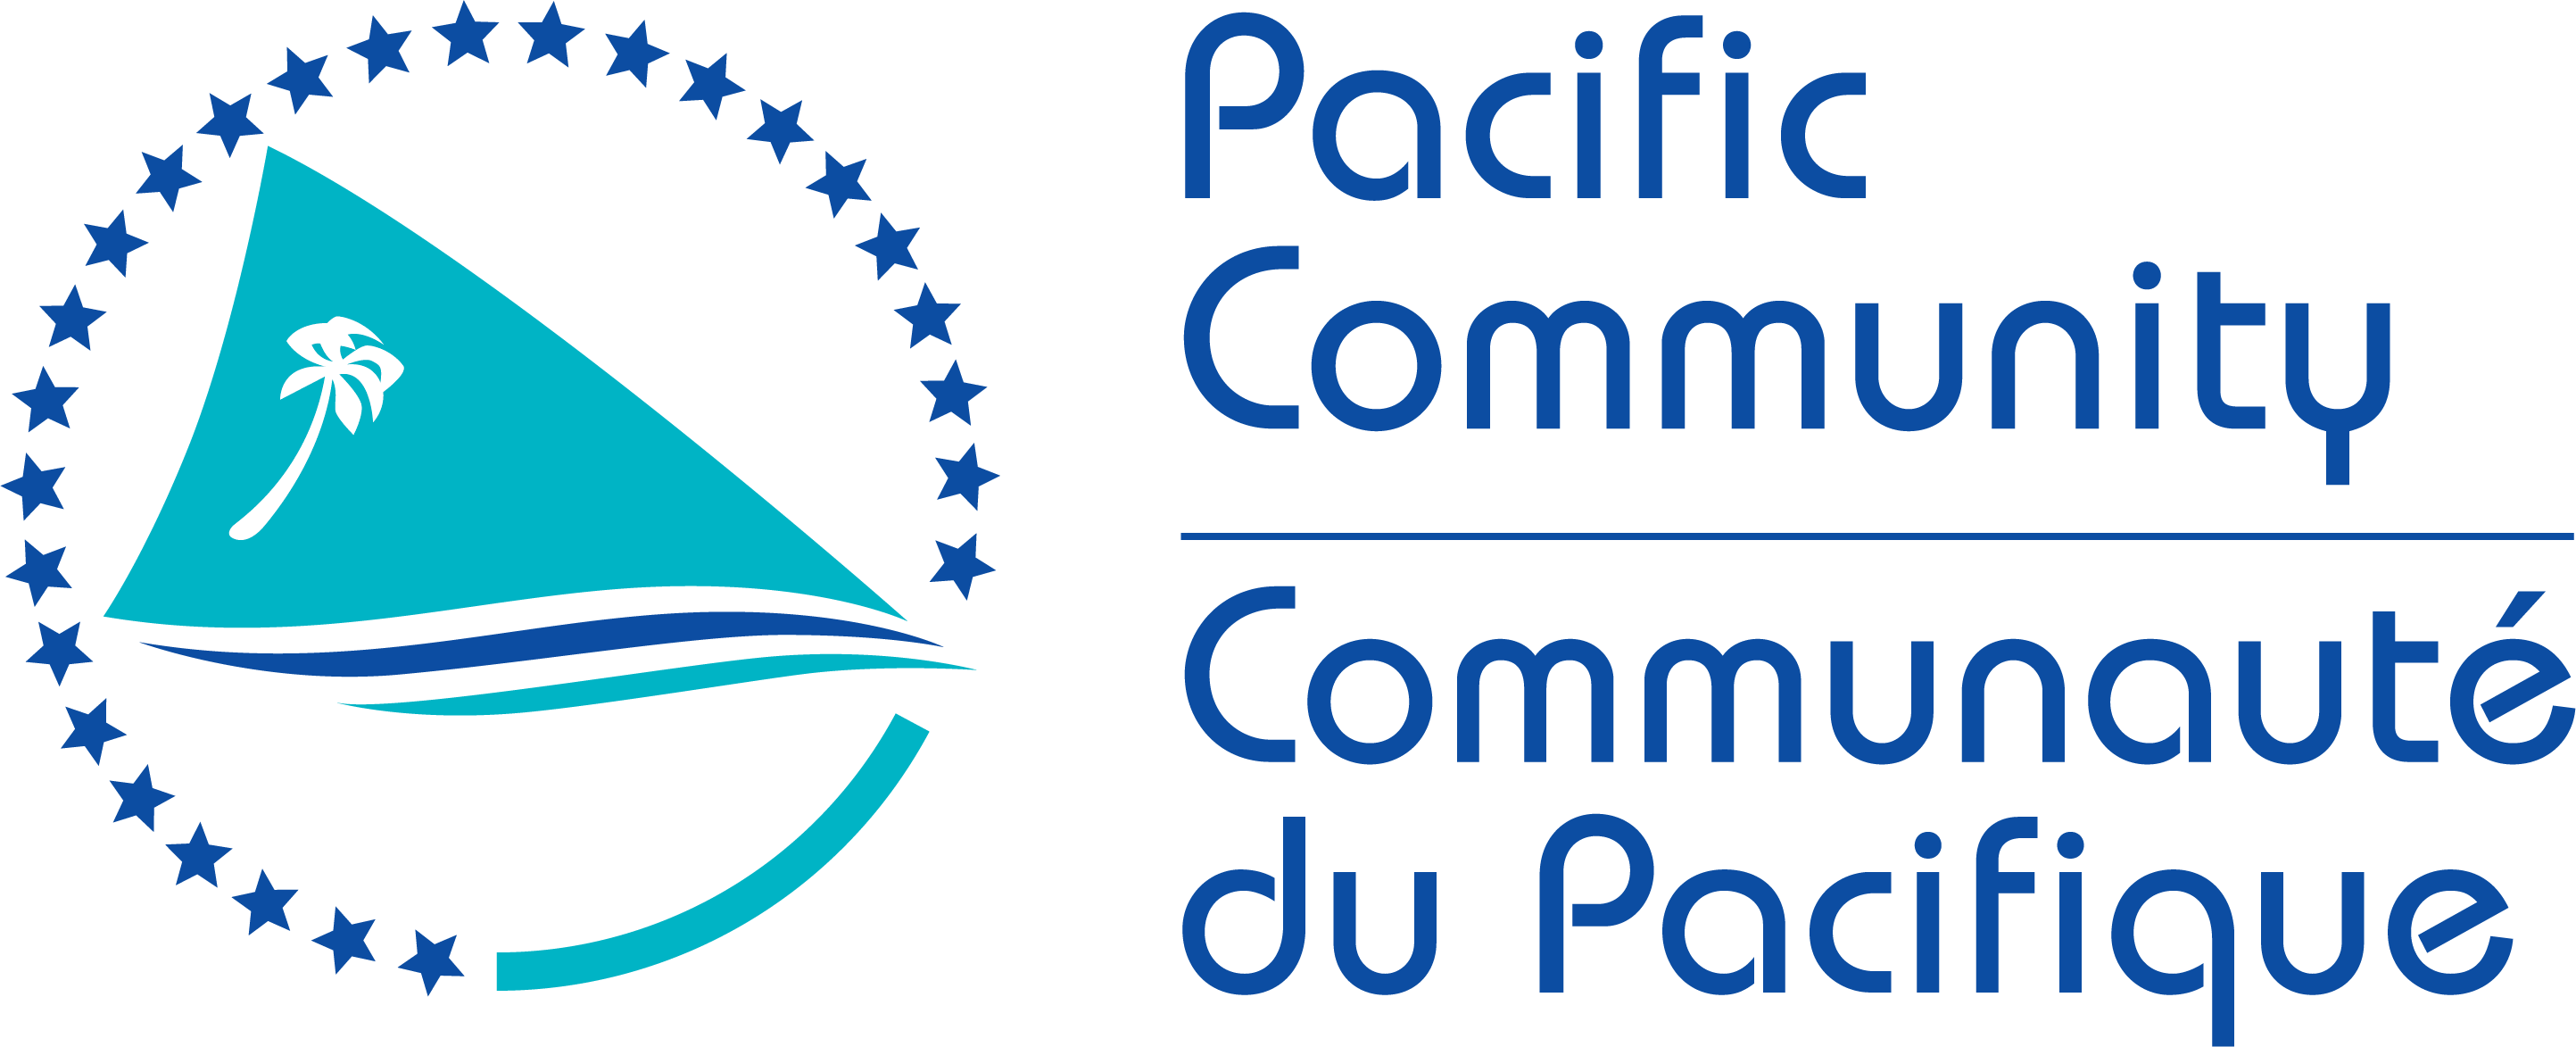 SPC 27 stars logo (color)